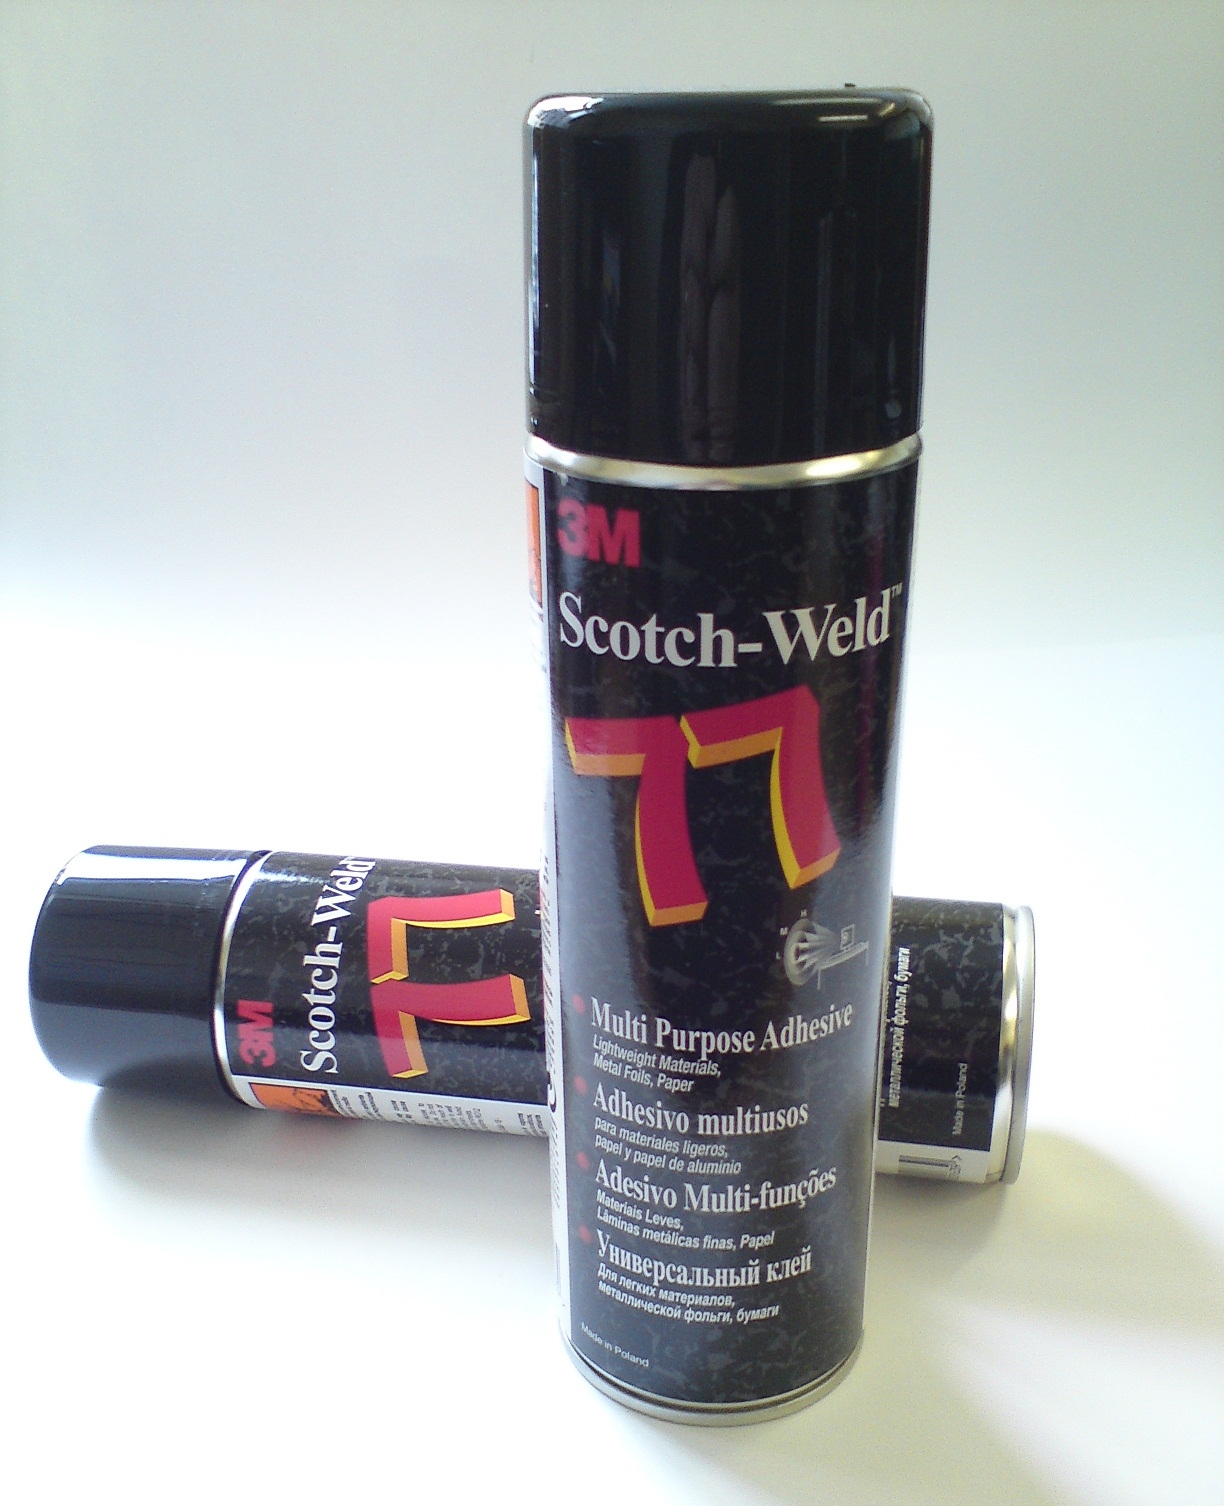 3M™ Repositionable 75 Spray Adhesive, Transparent, 500 ml